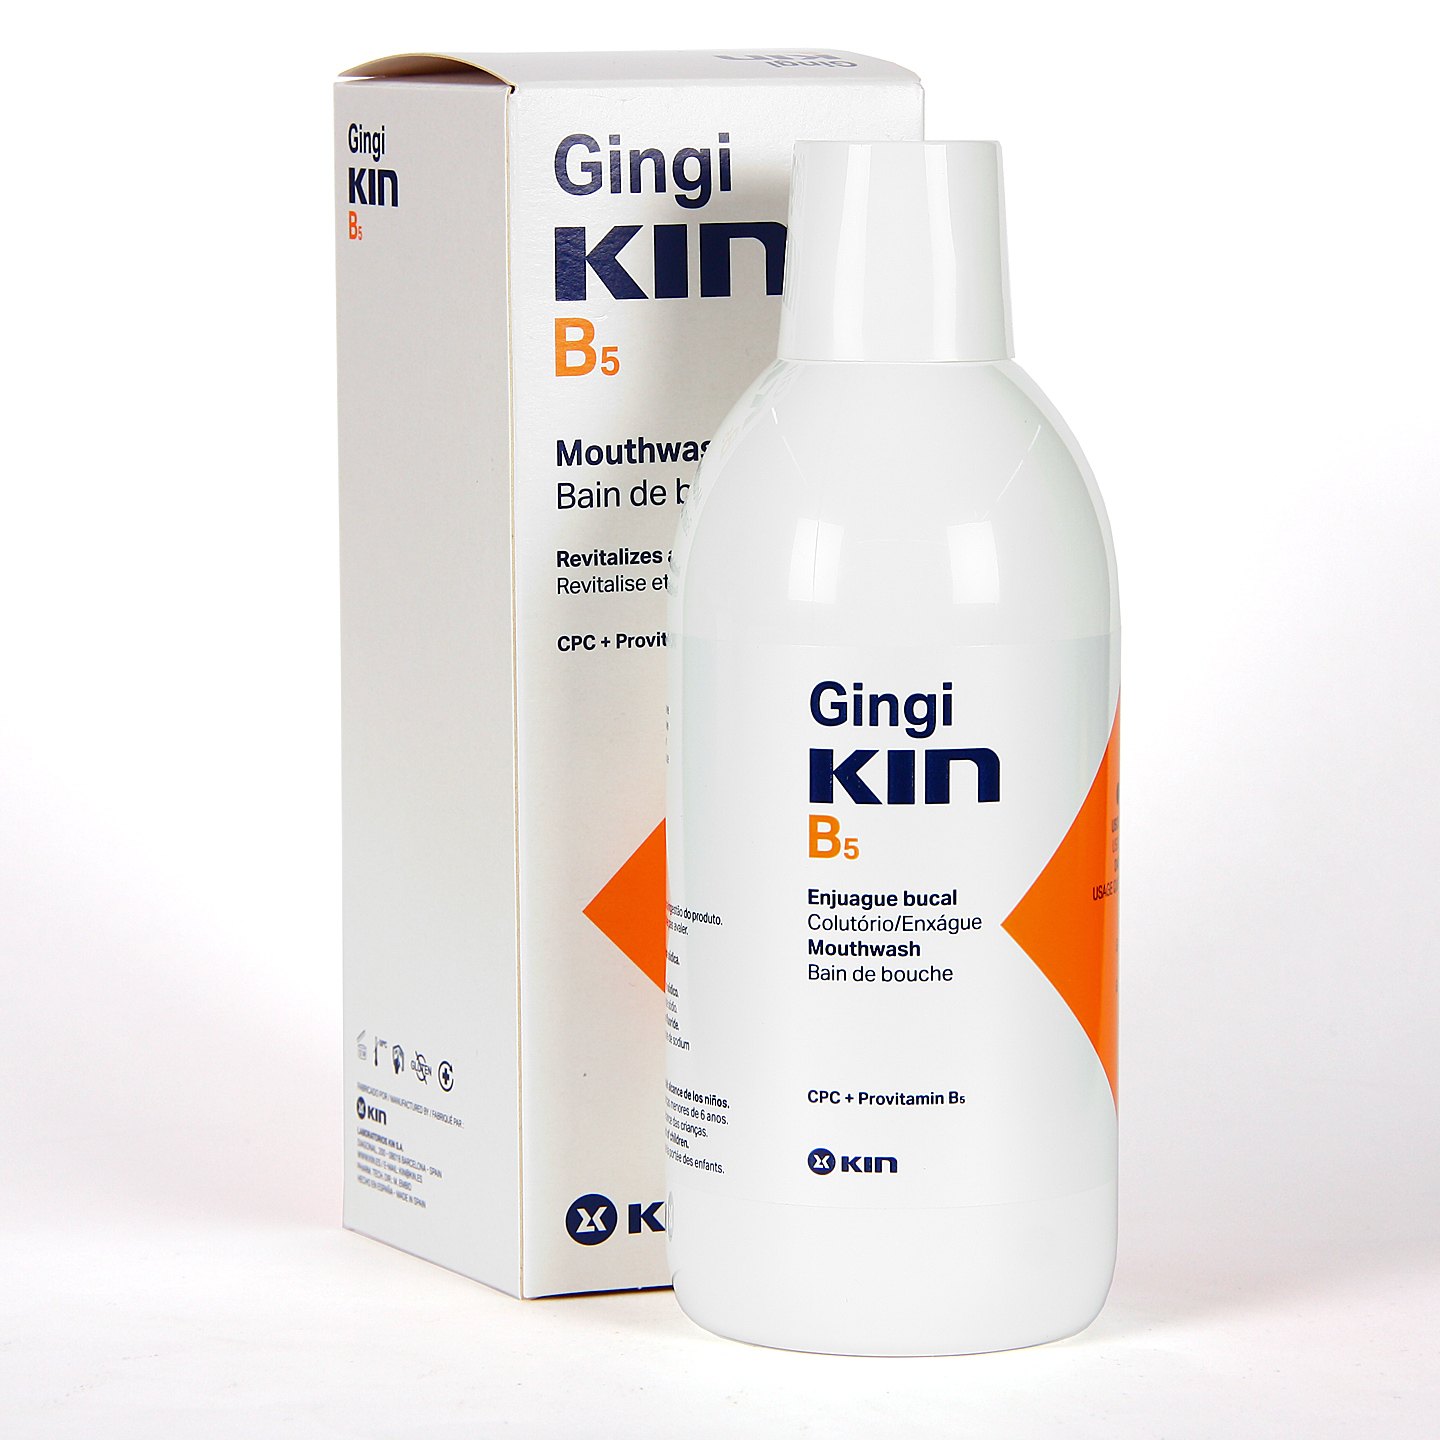 gingi-kin-enjuague-bucal-uso-diario-500-ml-1440